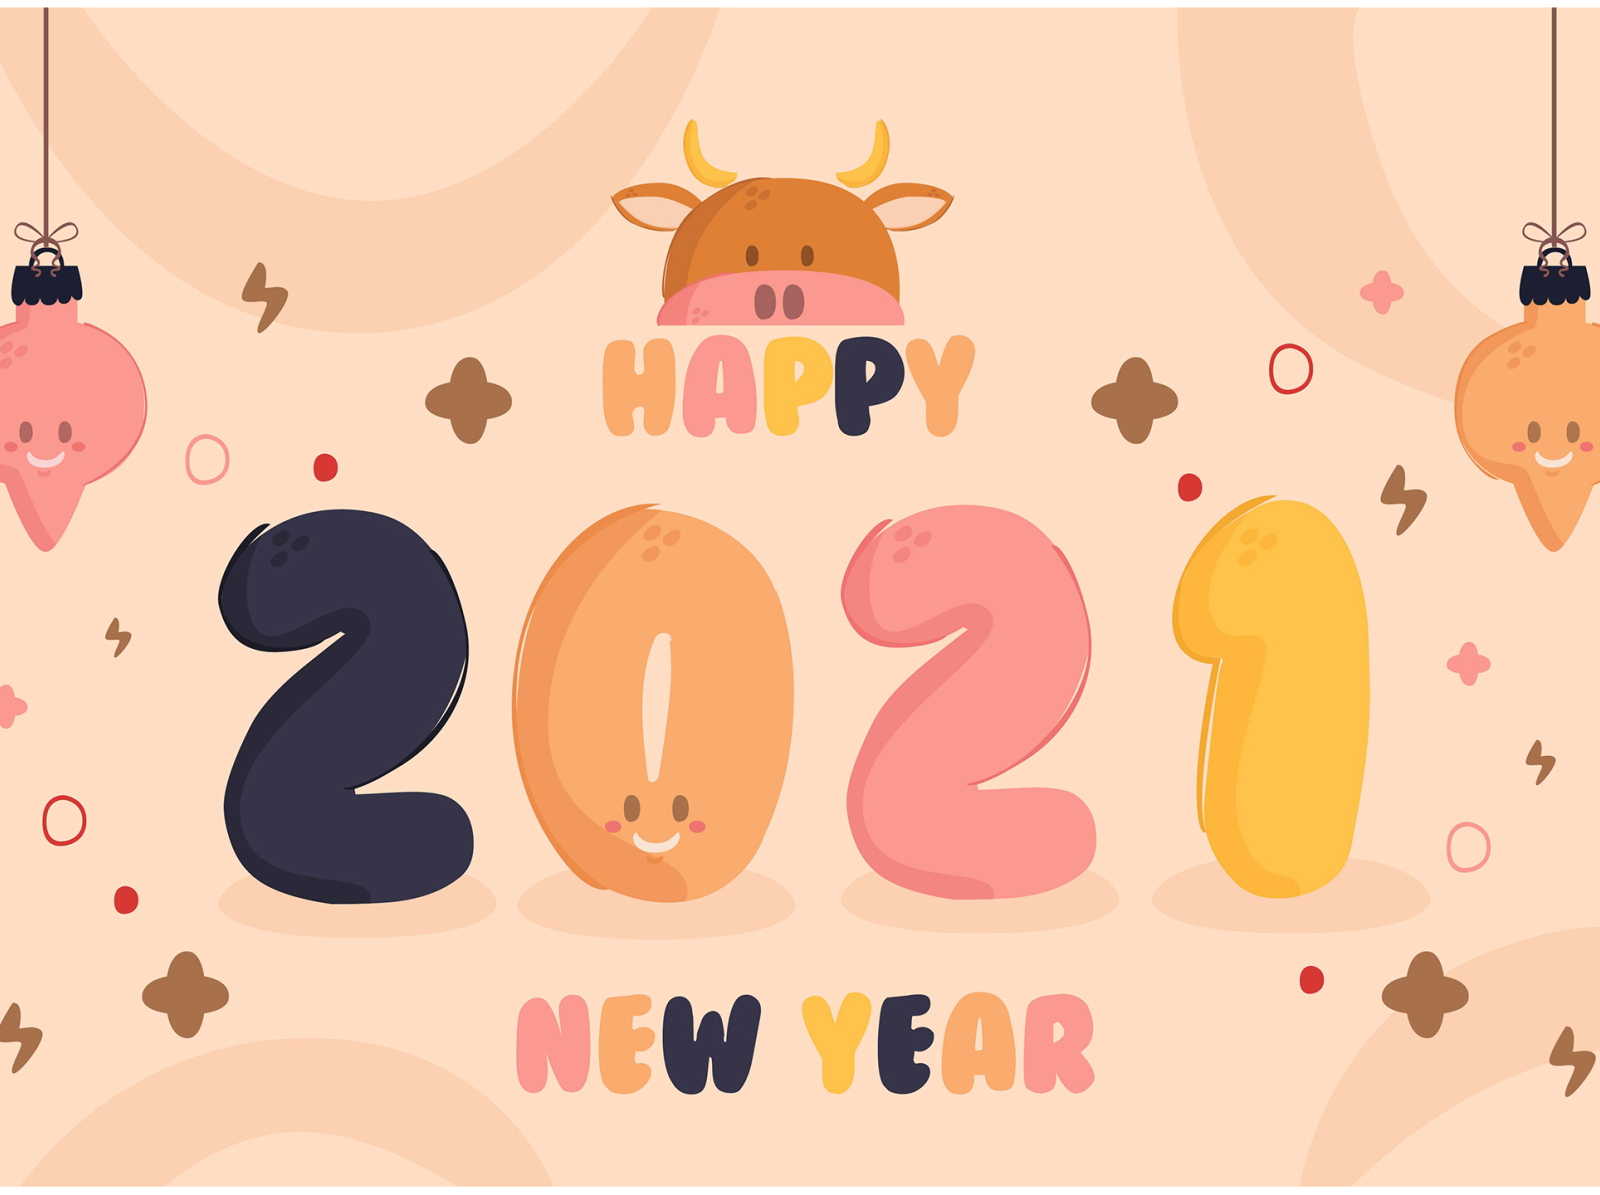 2021 New Year Background Design by Fenny Apriliani on Dribbble